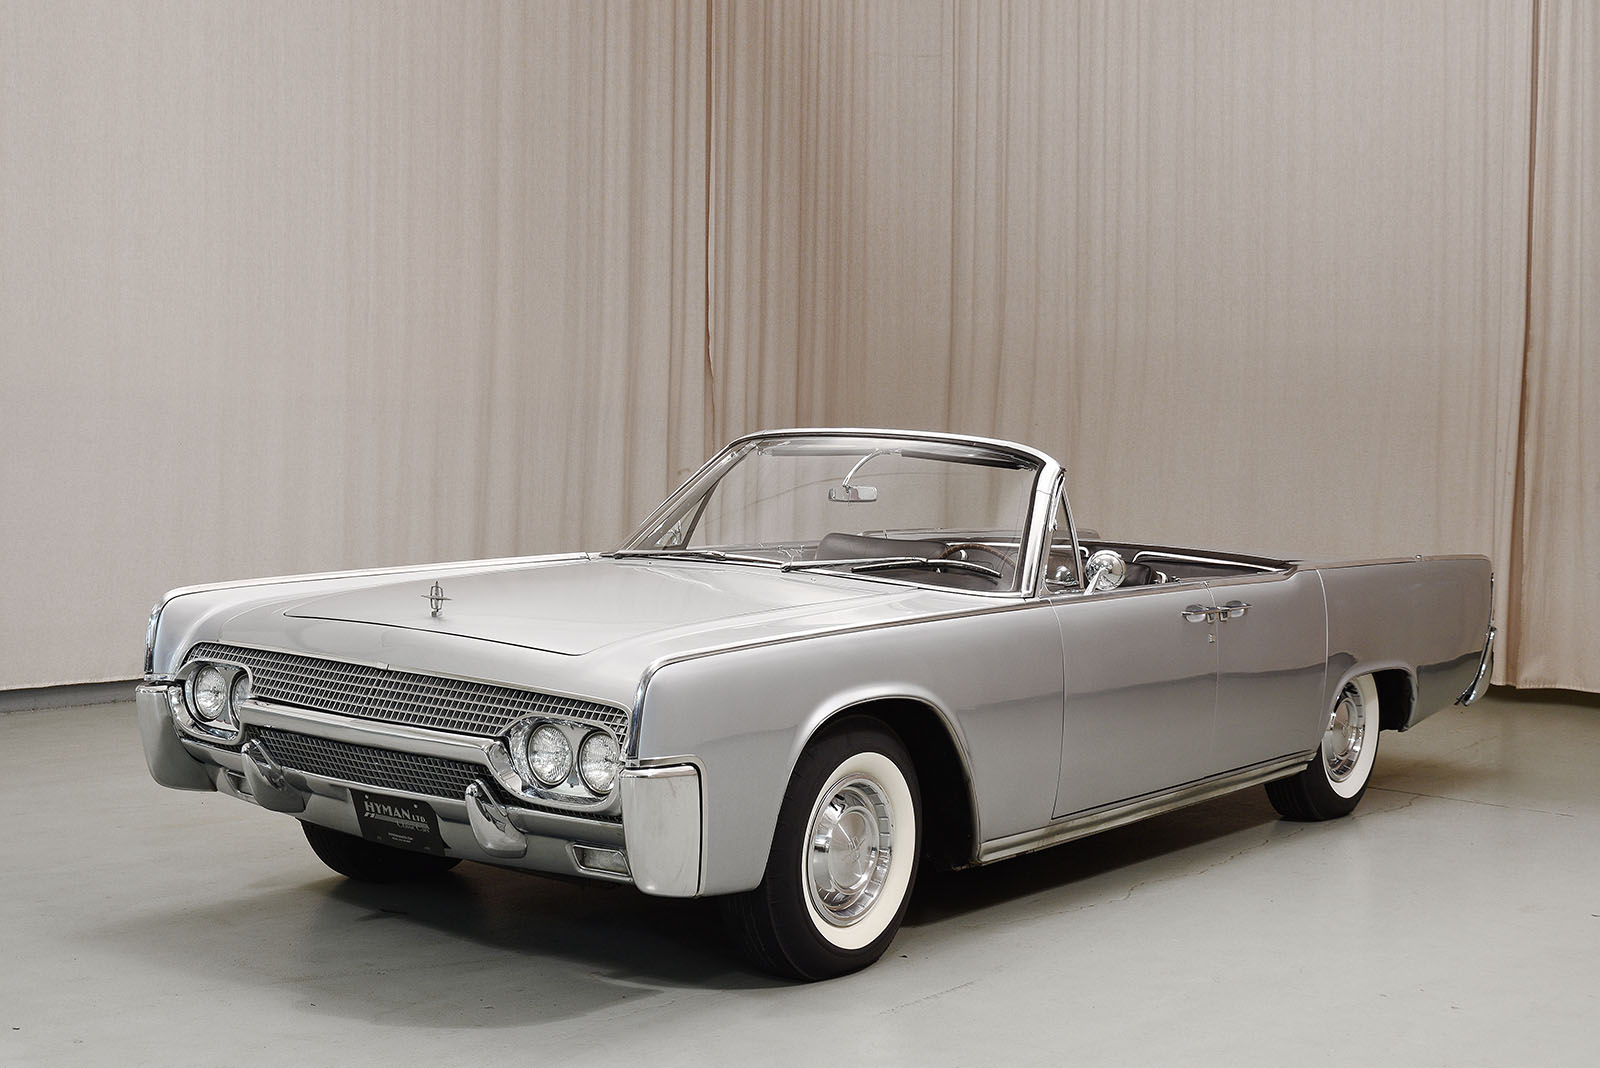 1961 Lincoln Continental Classic Car Guide